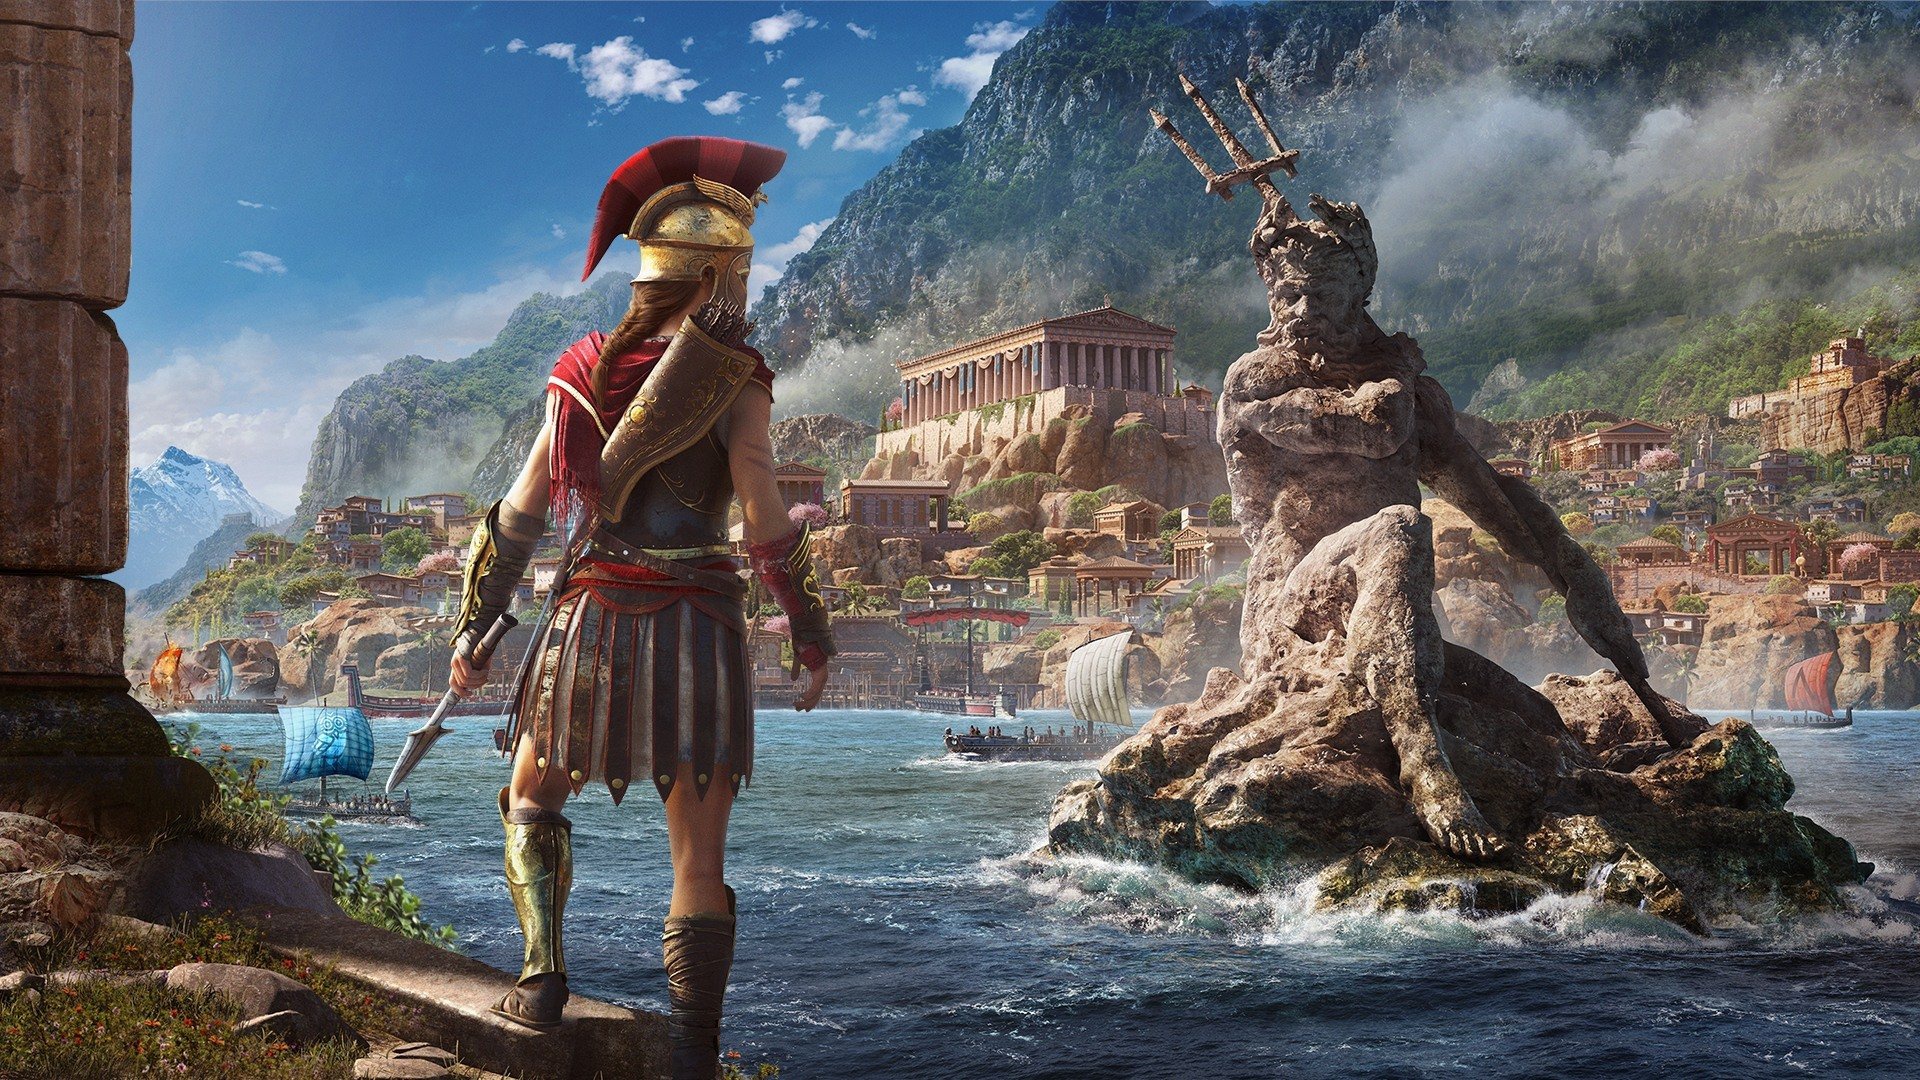 Comprar Assassin's Creed® Odyssey